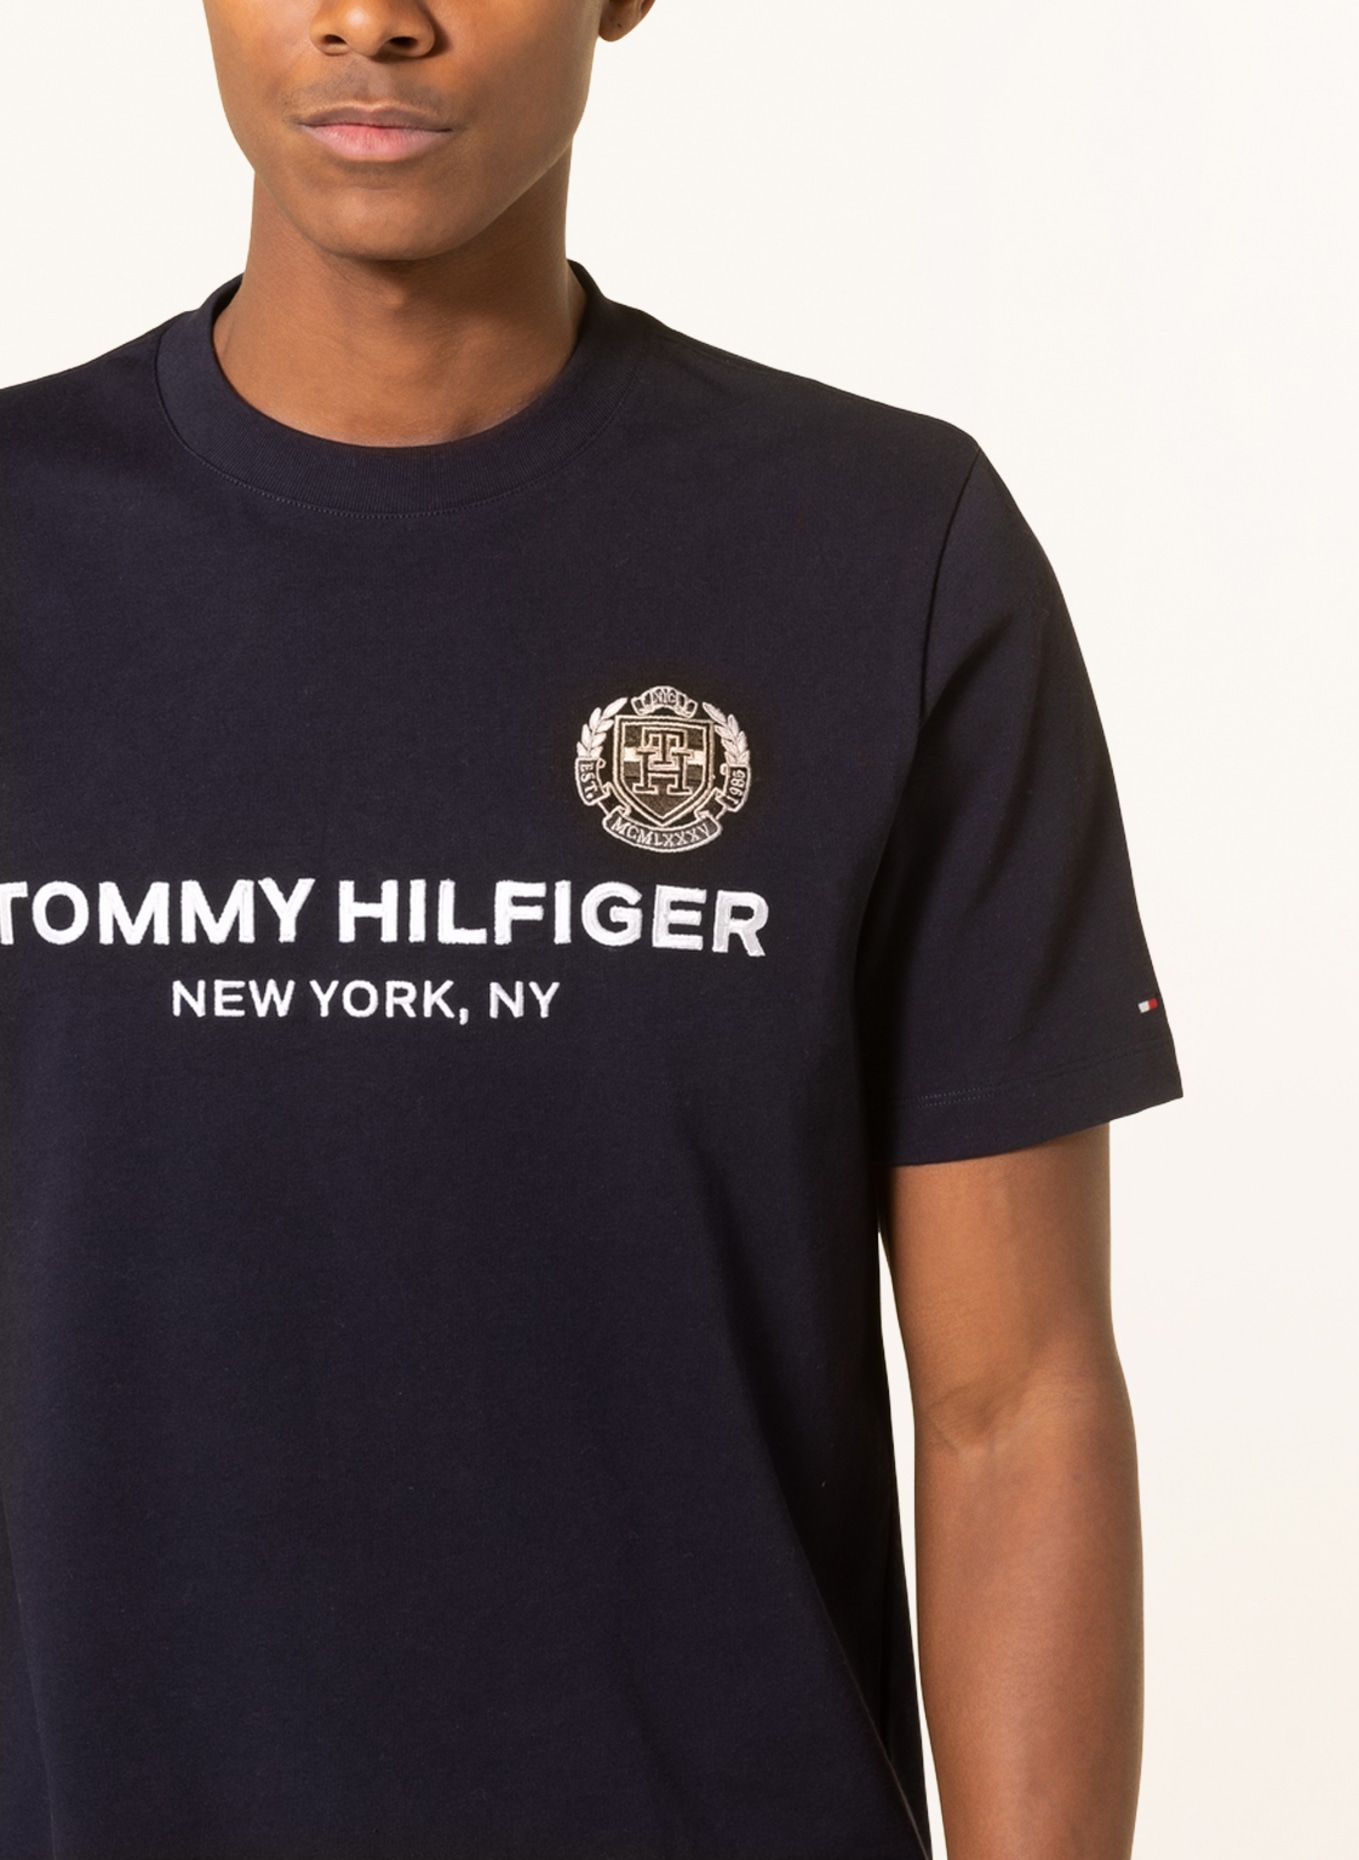 HILFIGER in TOMMY T-Shirt dunkelblau